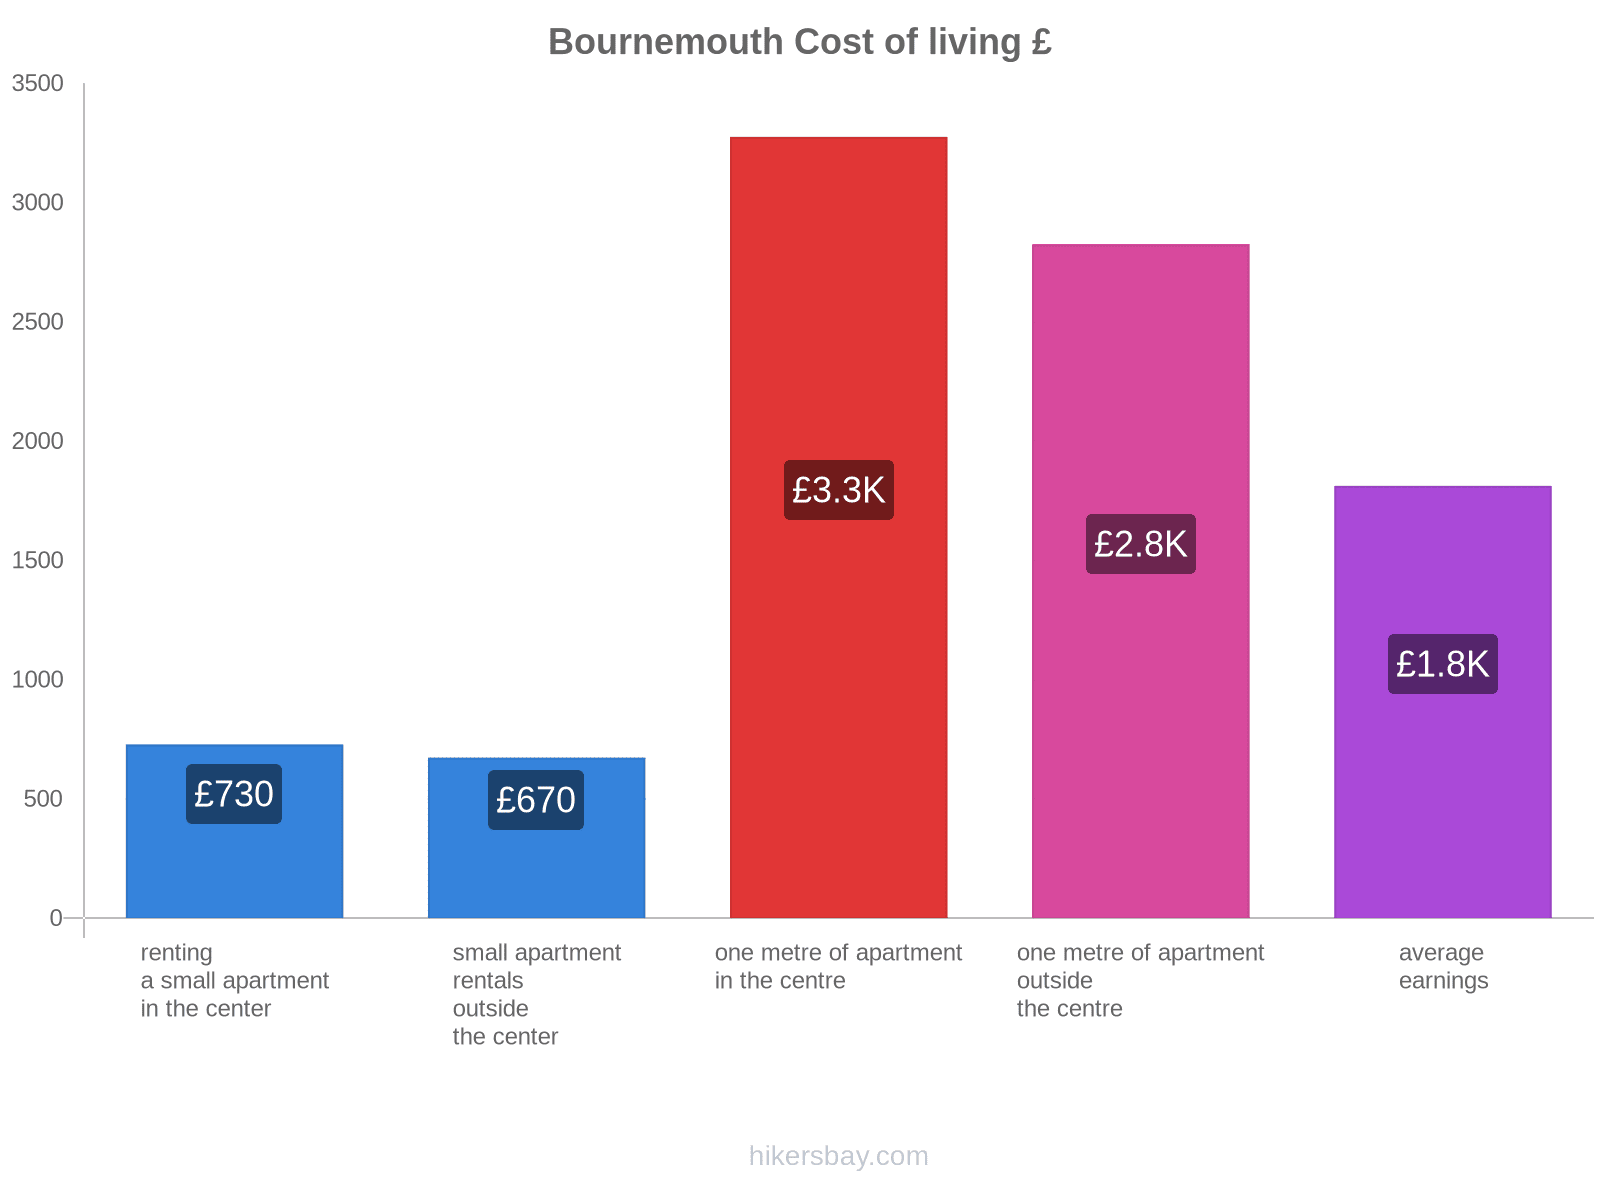 Bournemouth cost of living hikersbay.com